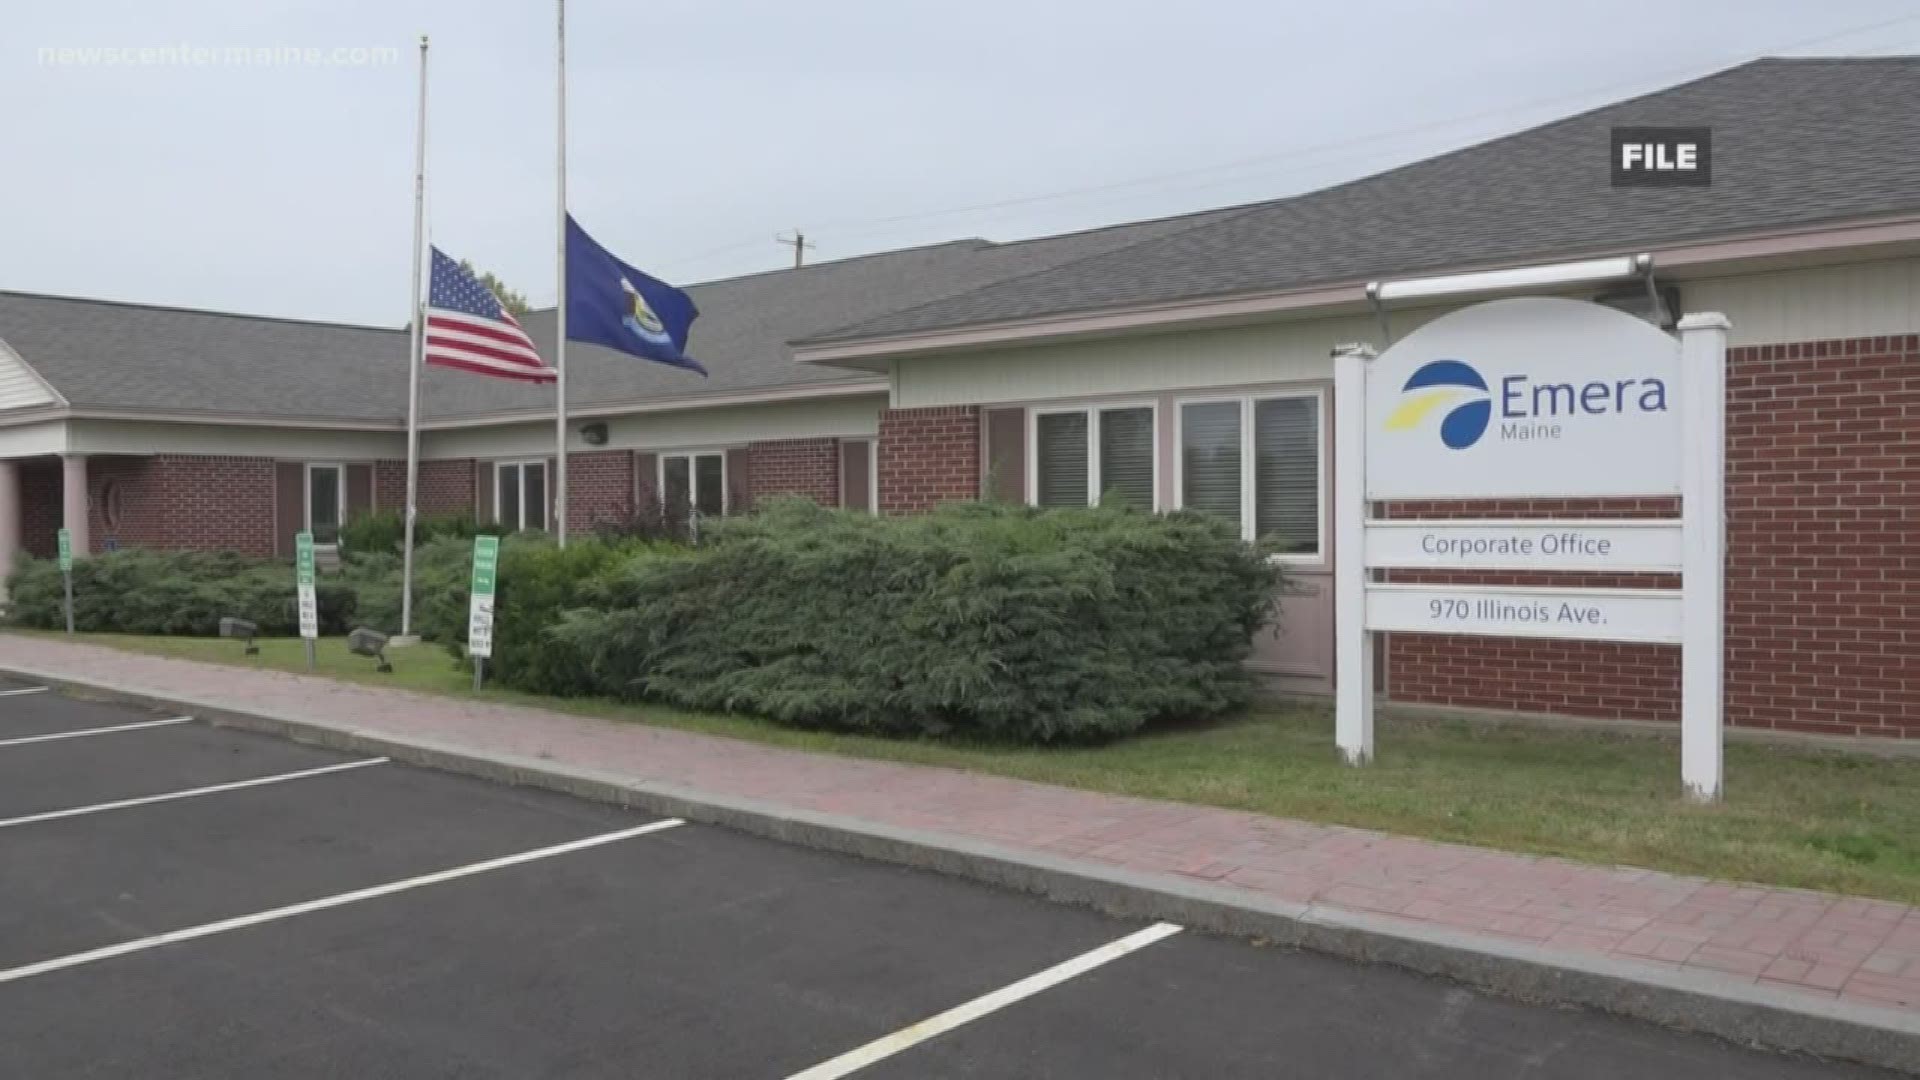 Maine state regulators approve sale of electric company Emera